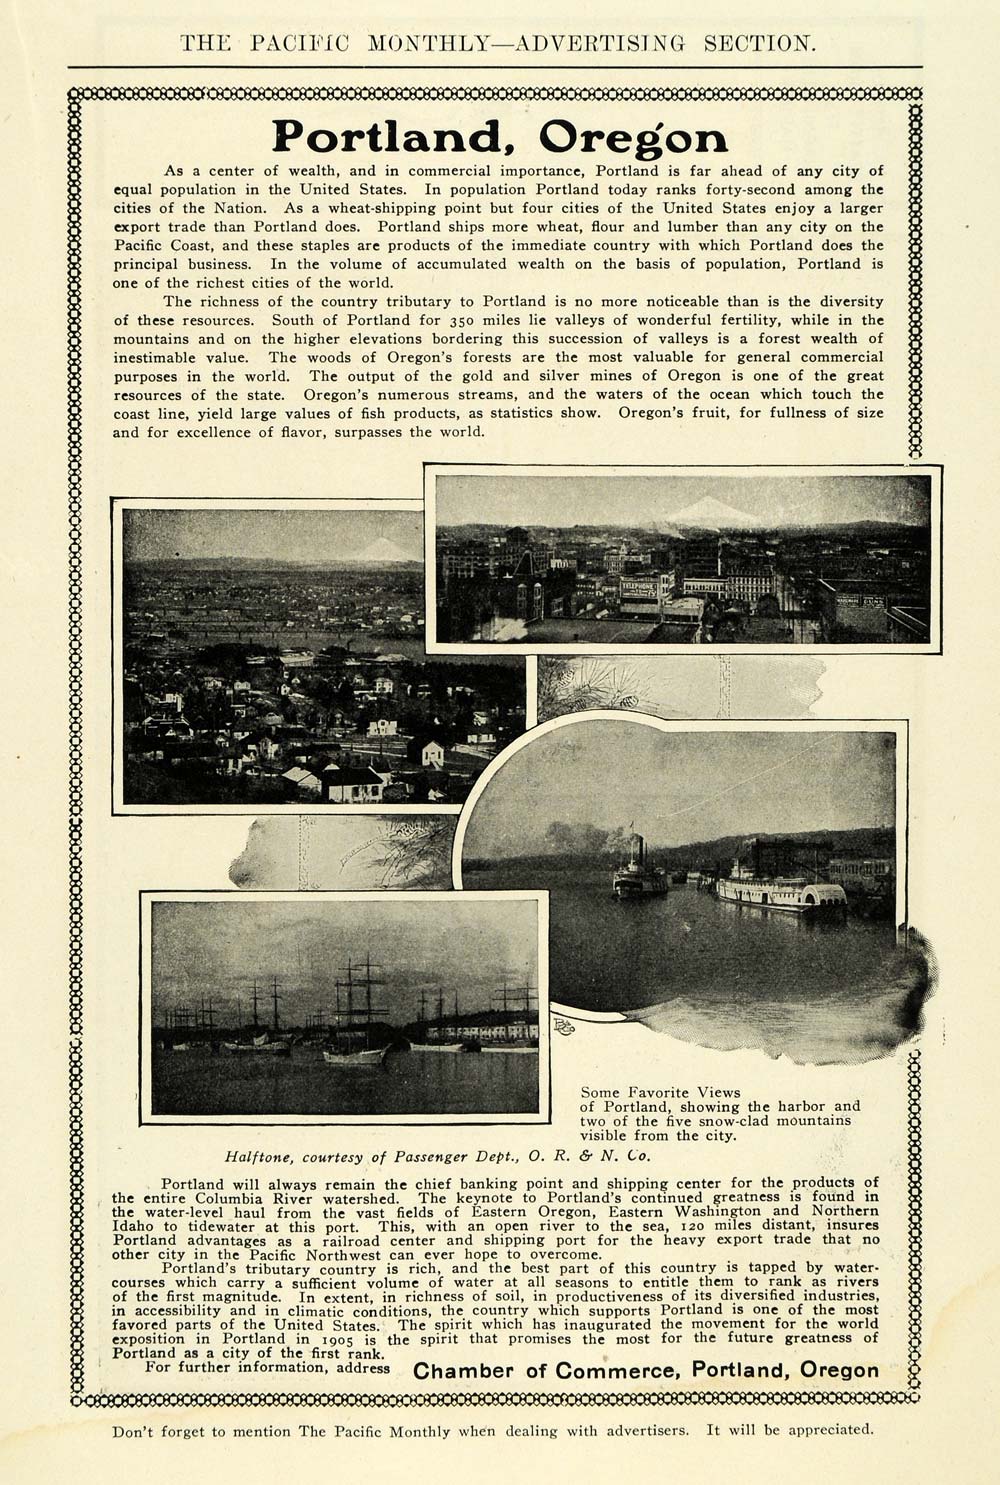 1904 Ad Portland Oregon Chamber Commerce Scenic Views - ORIGINAL ADVERTISING PM2